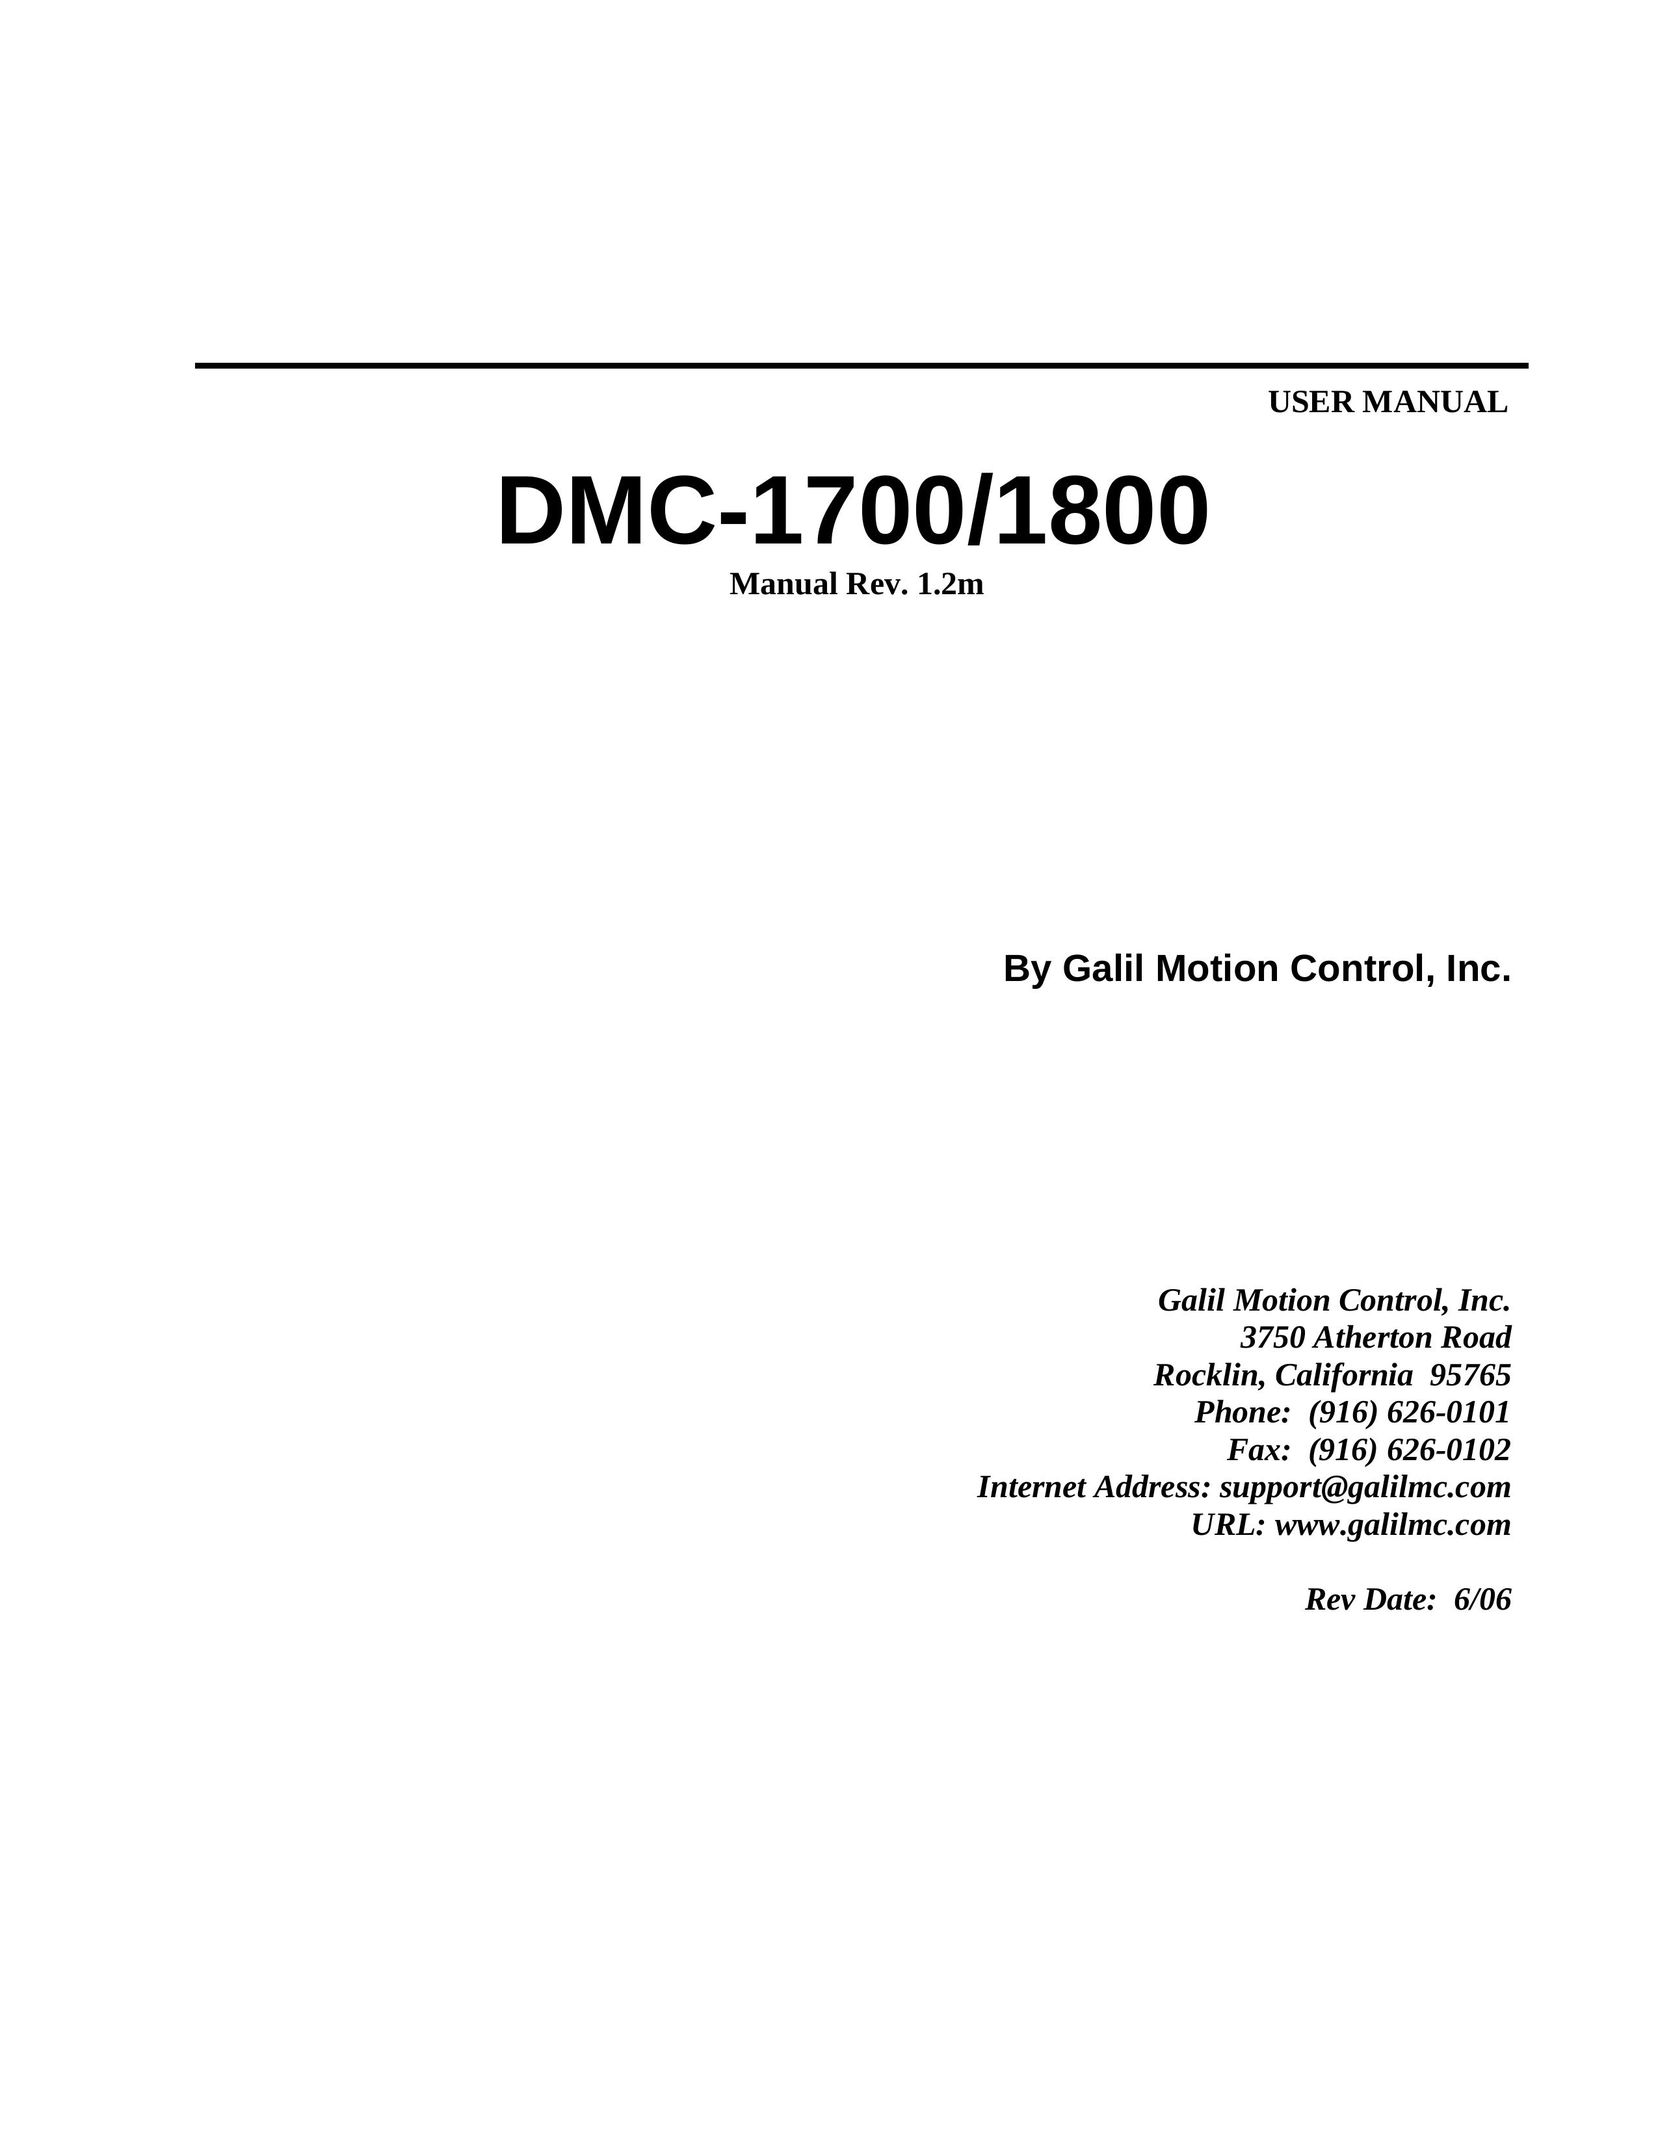 Galil DMC-1800 Home Security System User Manual